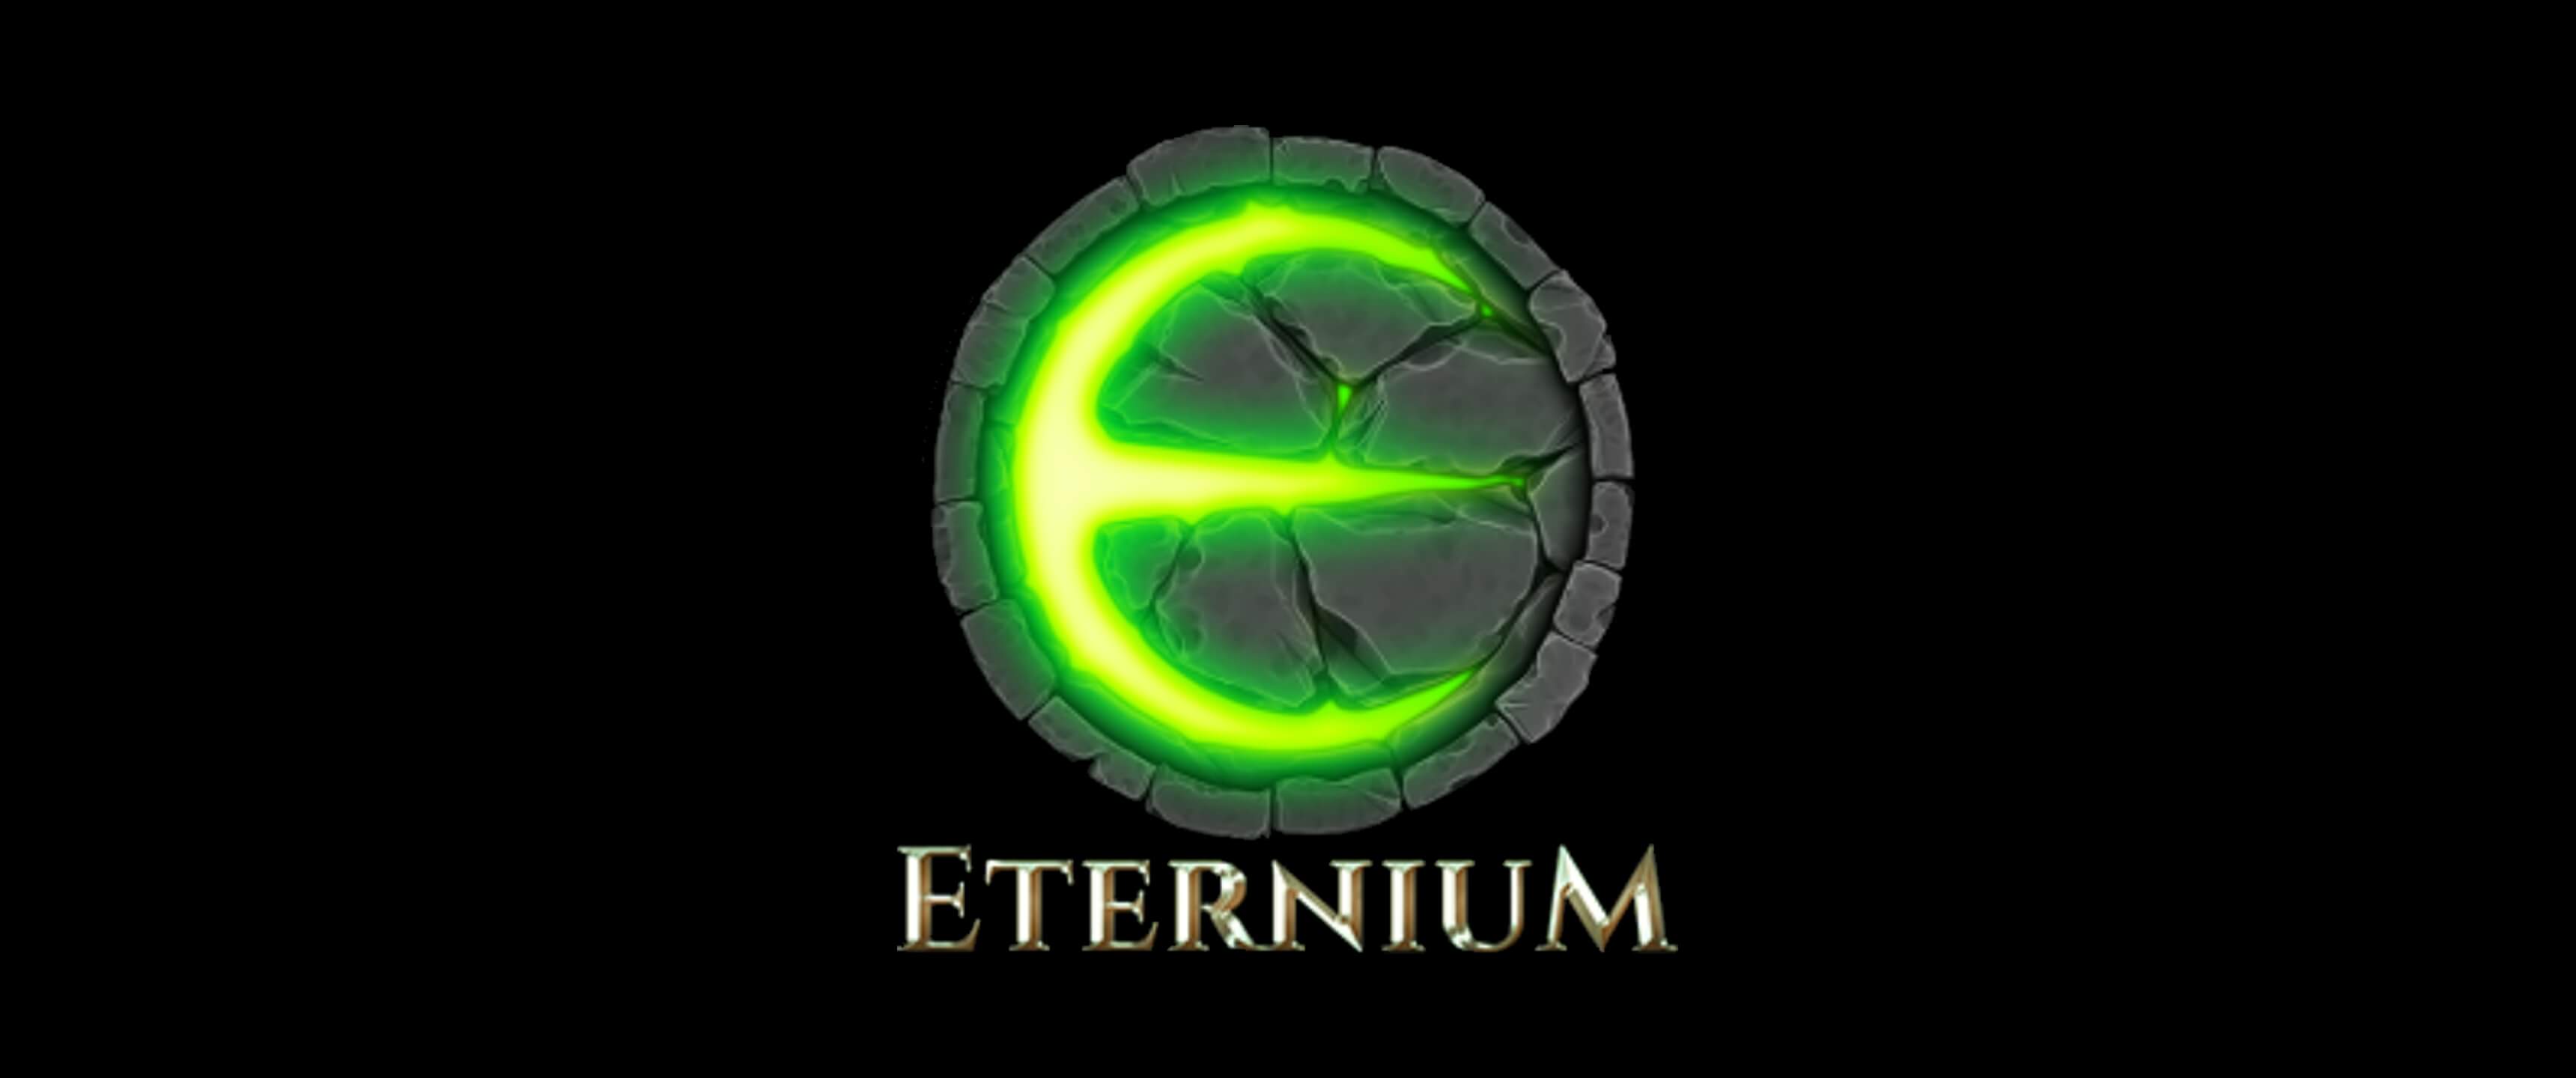 hack eternium with script game guardian forum